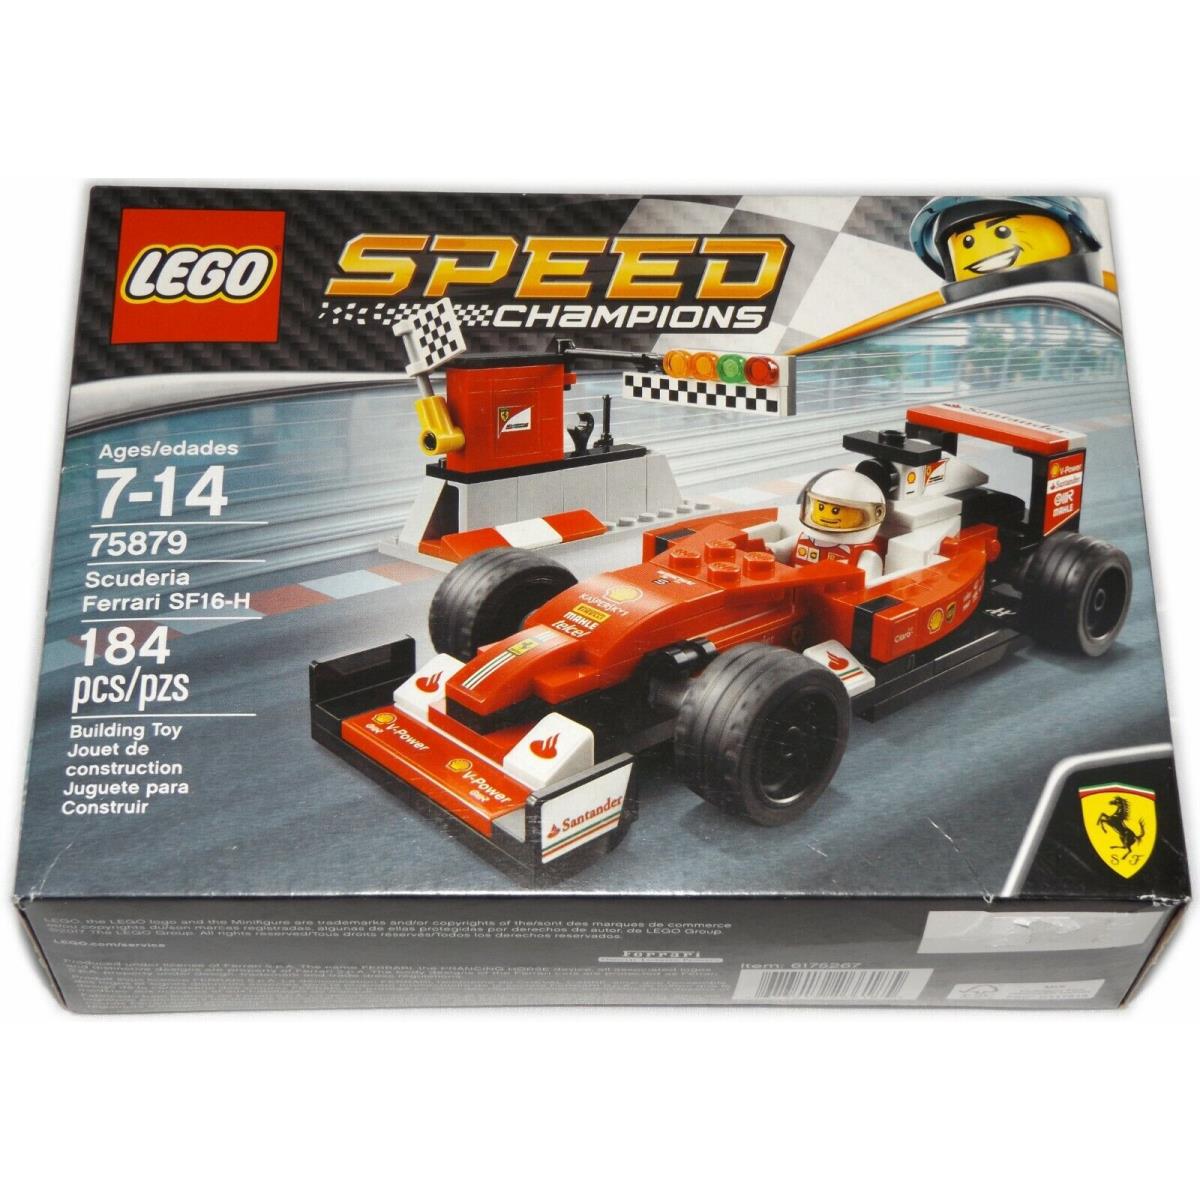 Lego 75879 Scuderia Ferrari SF16-H Speed Champions